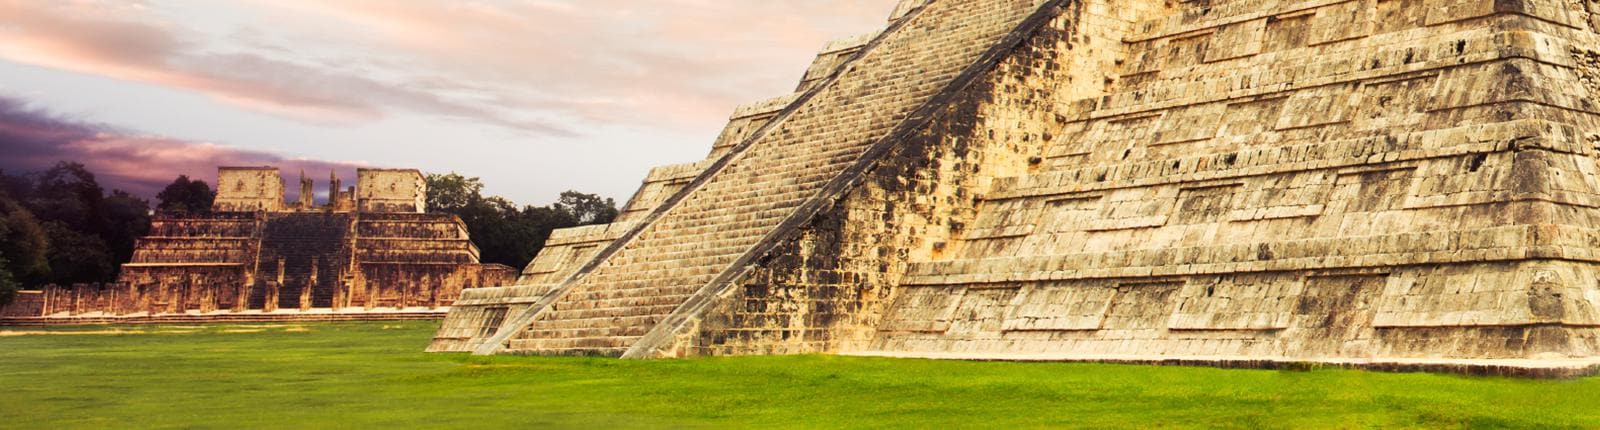 Tranquil view of the Mayan Pyramids in Progreso, Yucatan